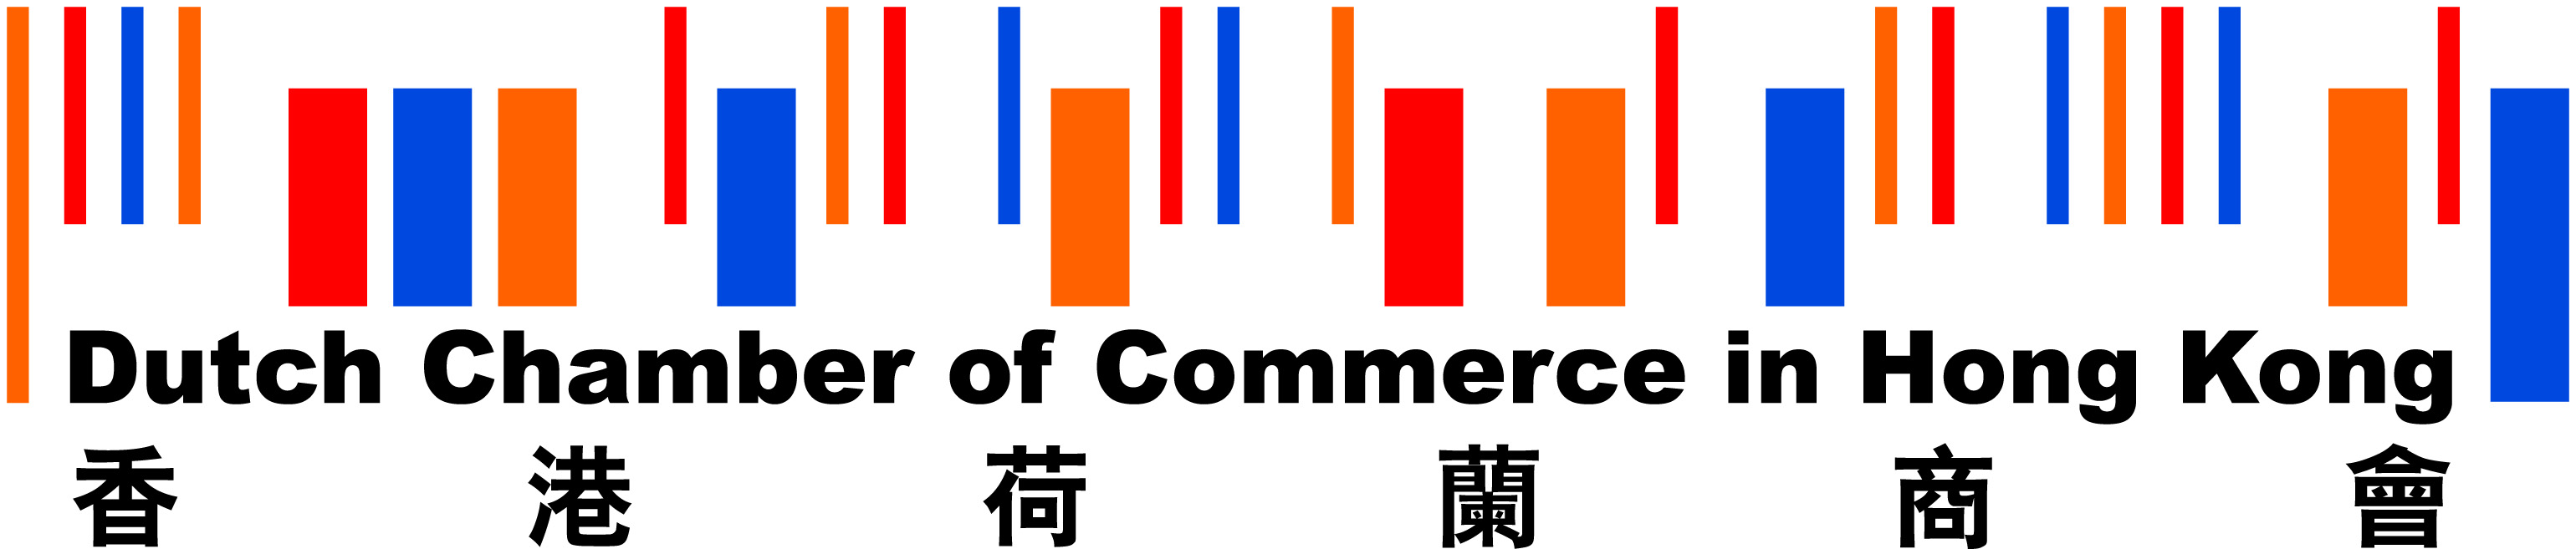 Dutch Chamber of Commerce in Hong Kong